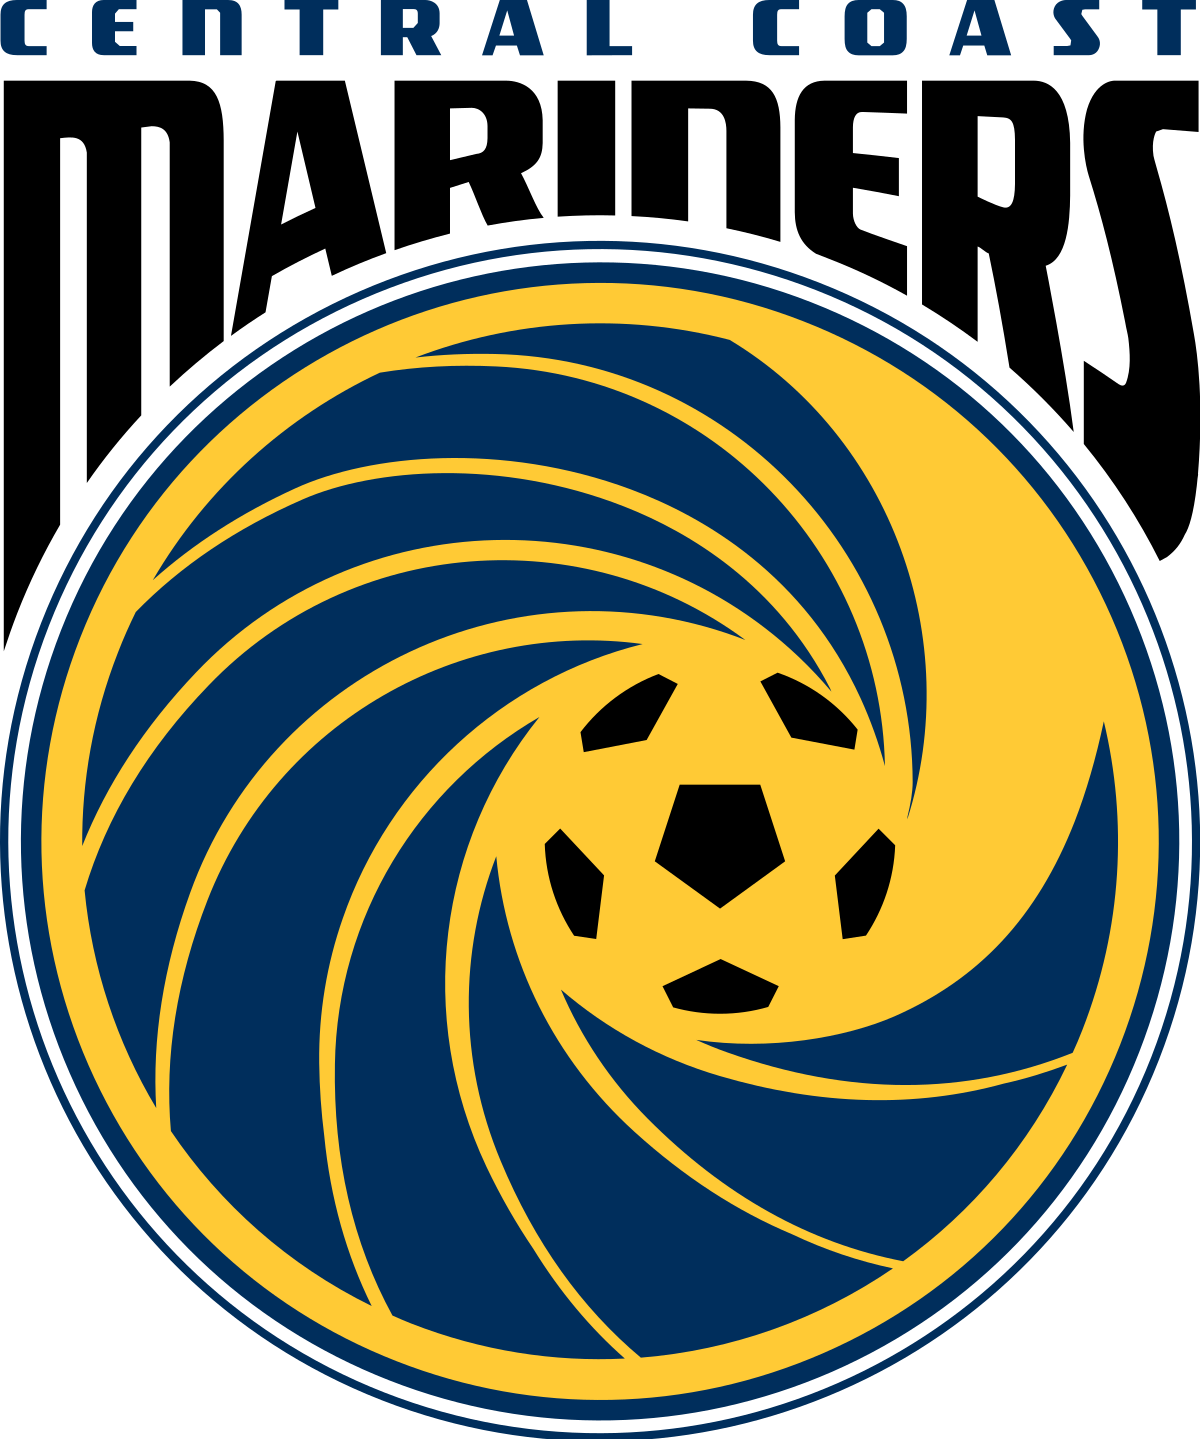 Central Coast W logo